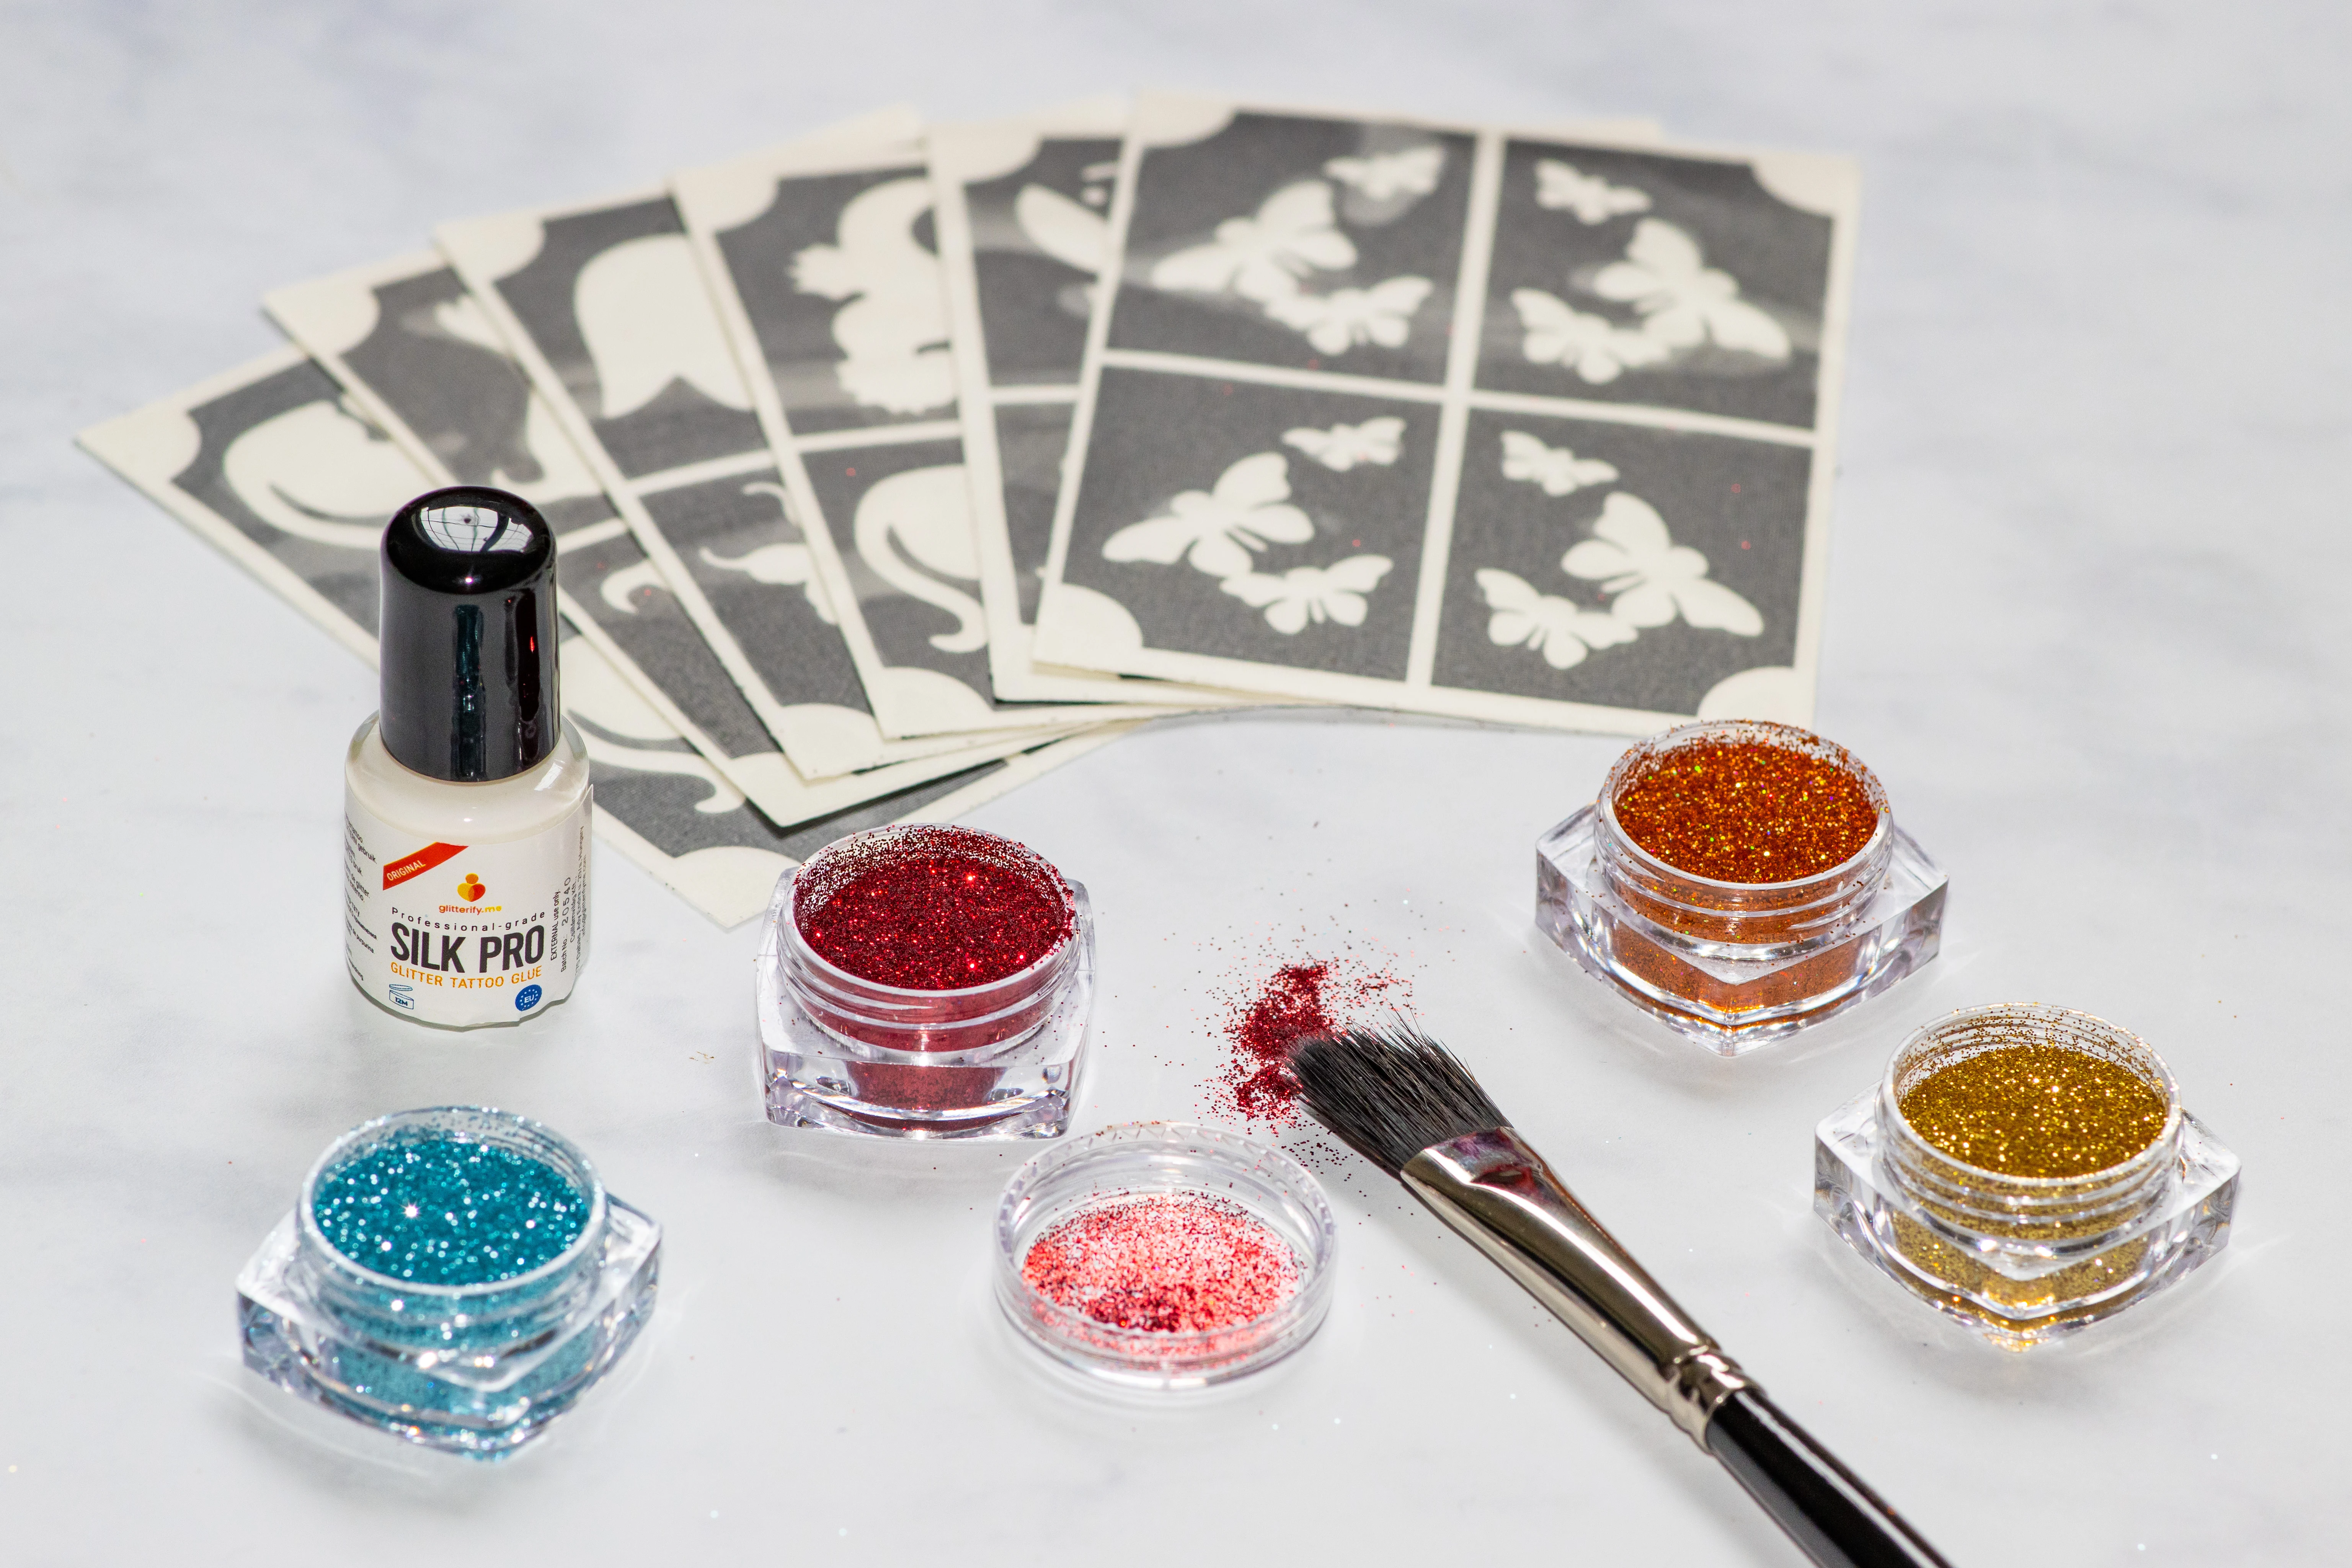 The contents of the Glitterify Me small glitter kits including stencils, 4 glitter pots, glue and applicator brush